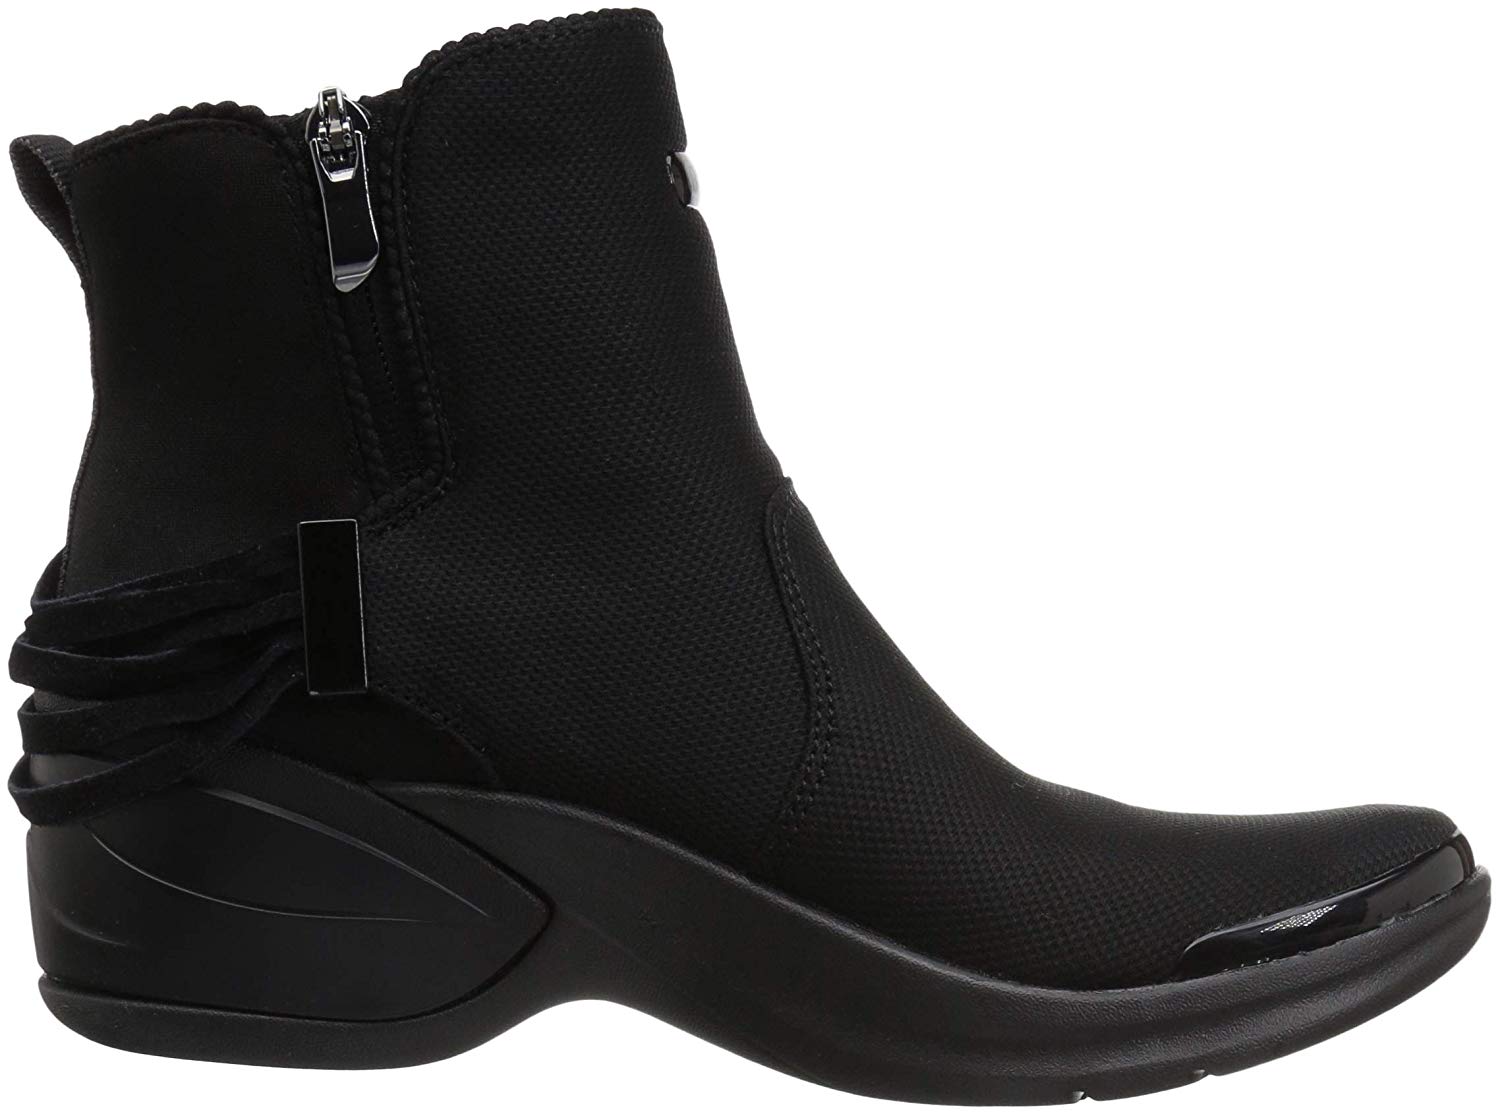 BZees Women's Mojo Mid Calf Boot, Black, Size 7.5 yUBR | eBay